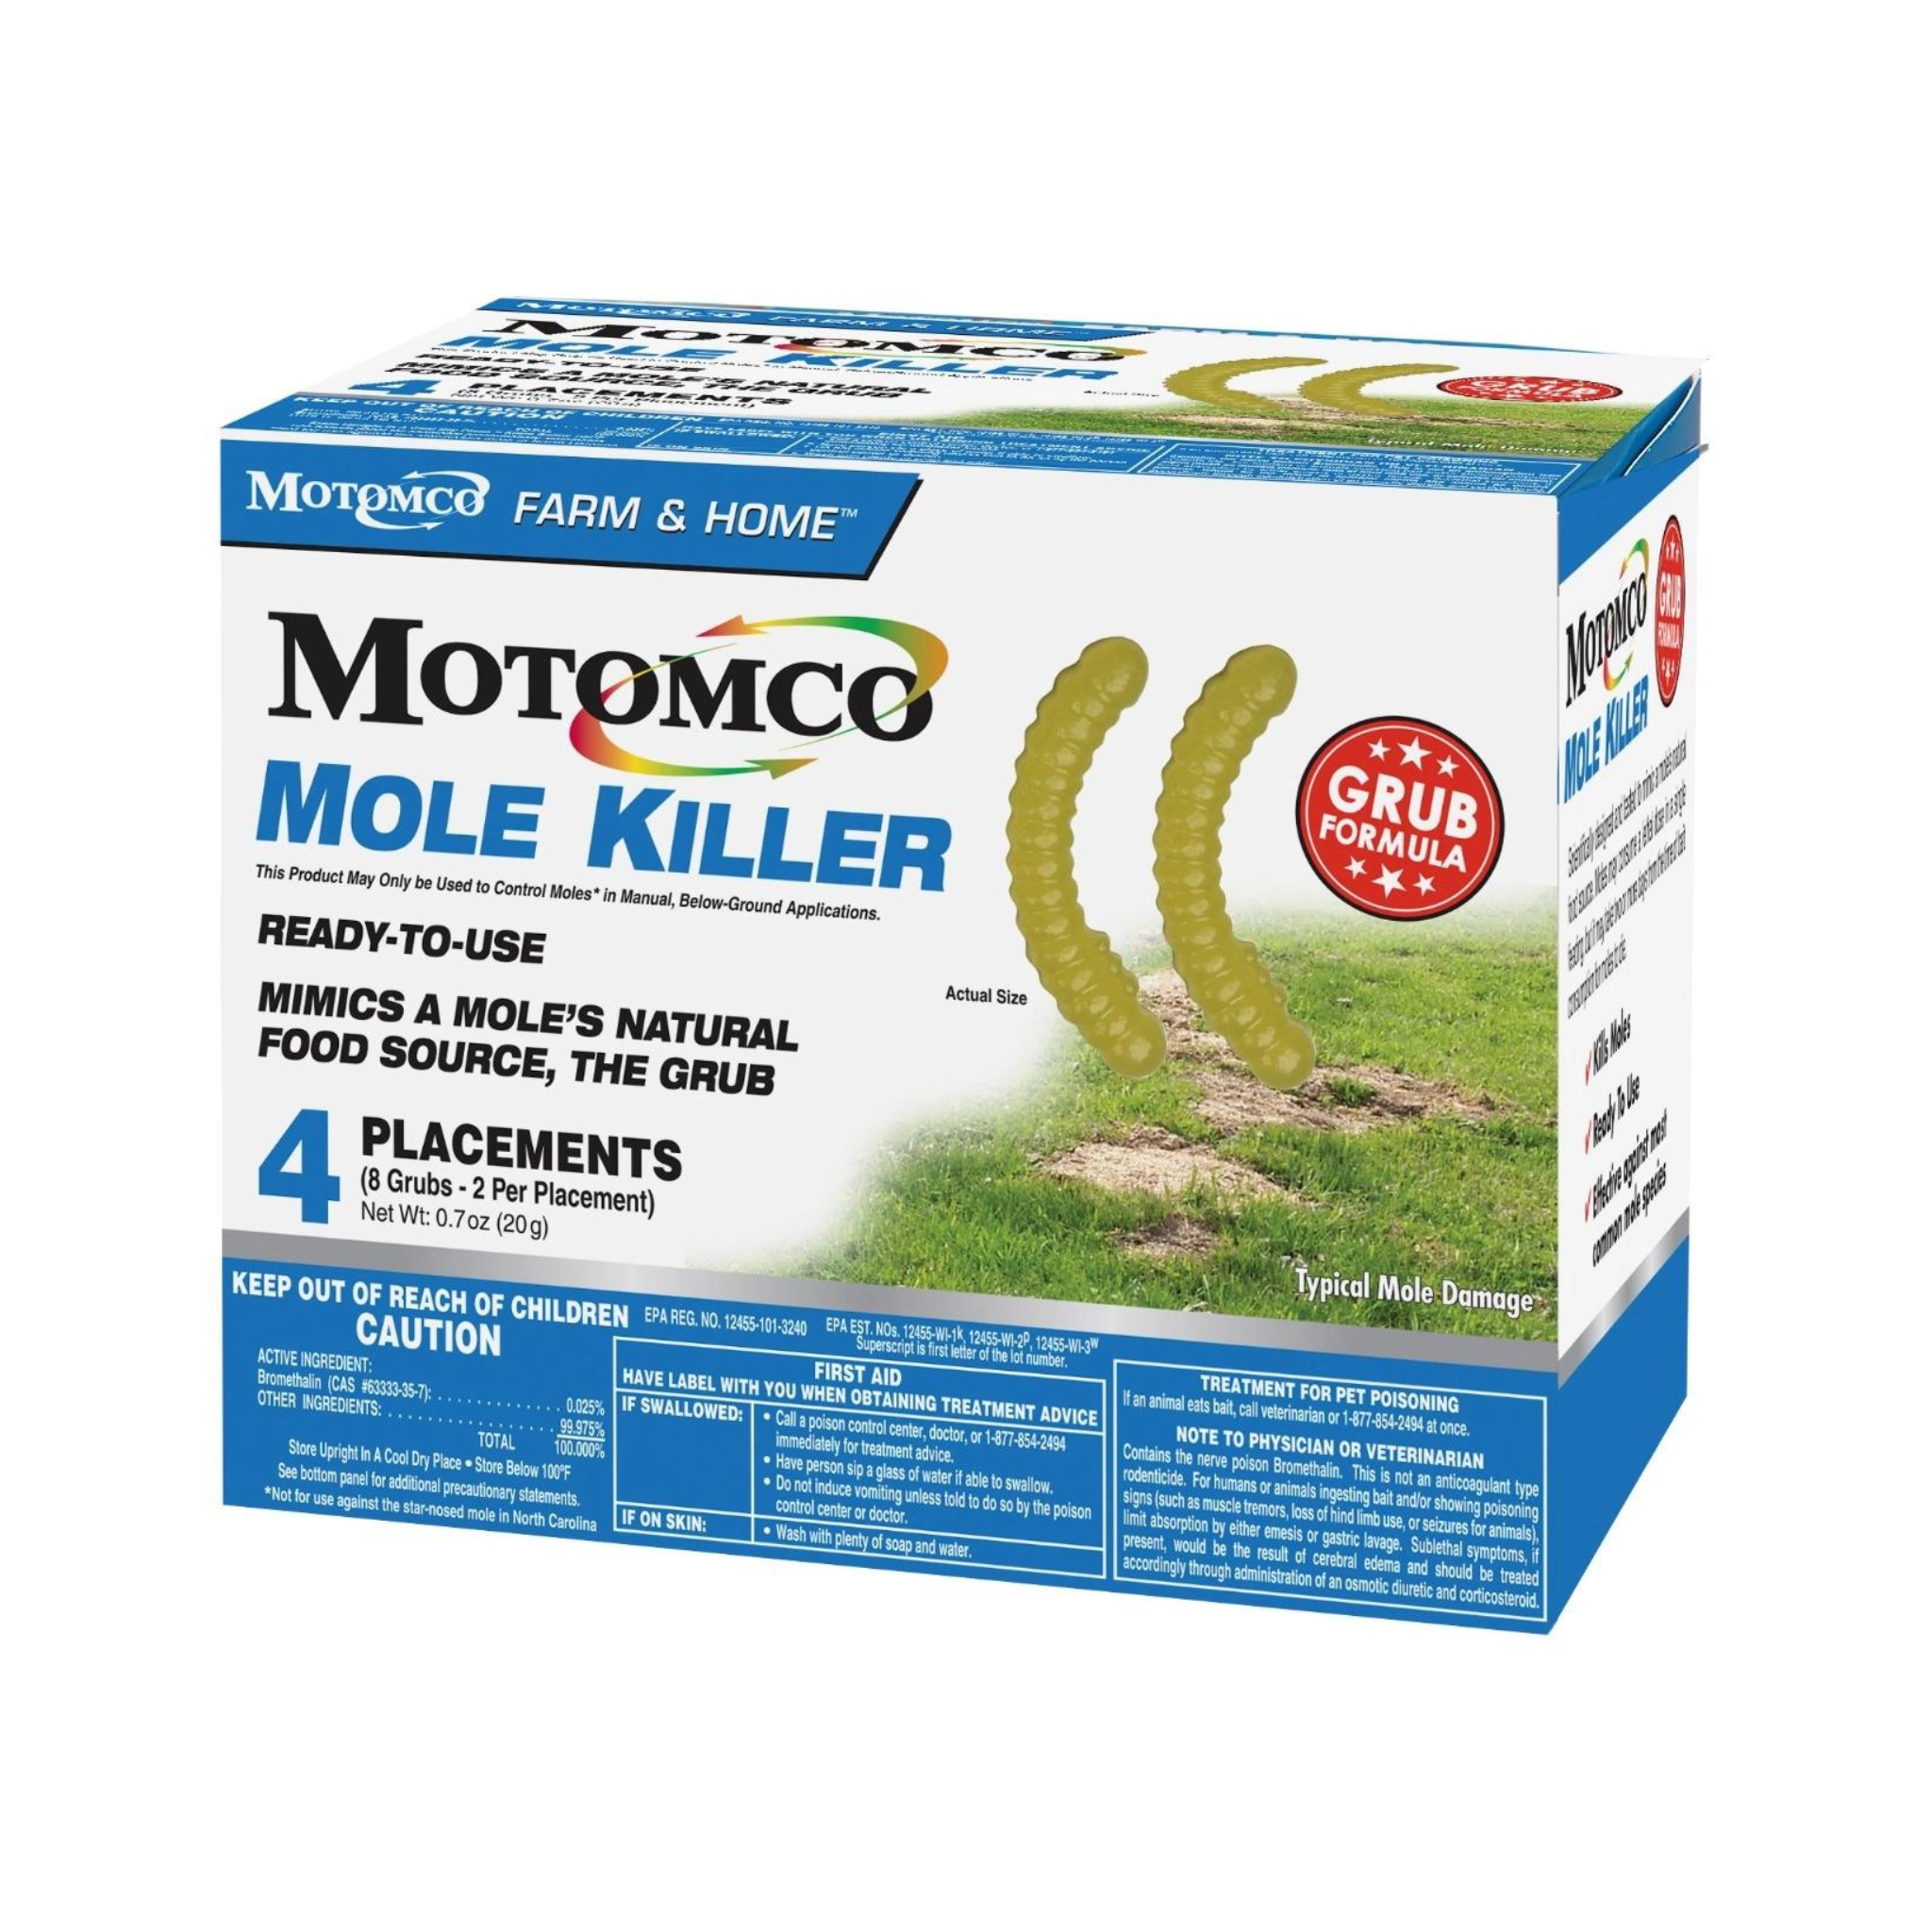 Motomco Mole Killer Grub Formula